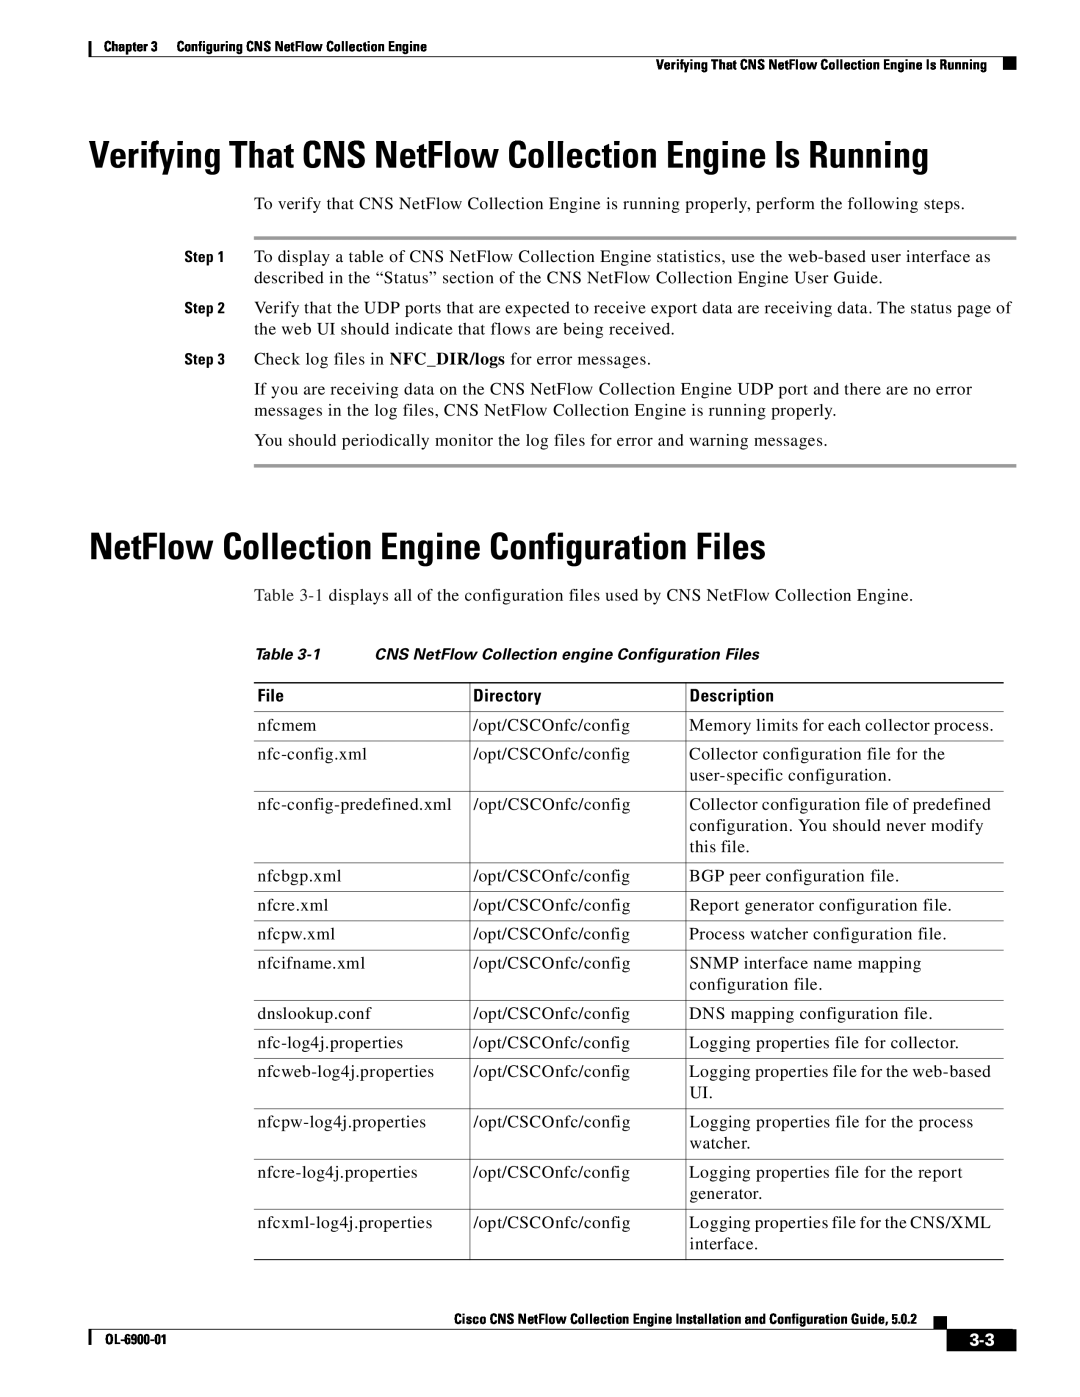 Cisco Systems OL-6900-01 manual NetFlow Collection Engine Configuration Files, Directory, Description 